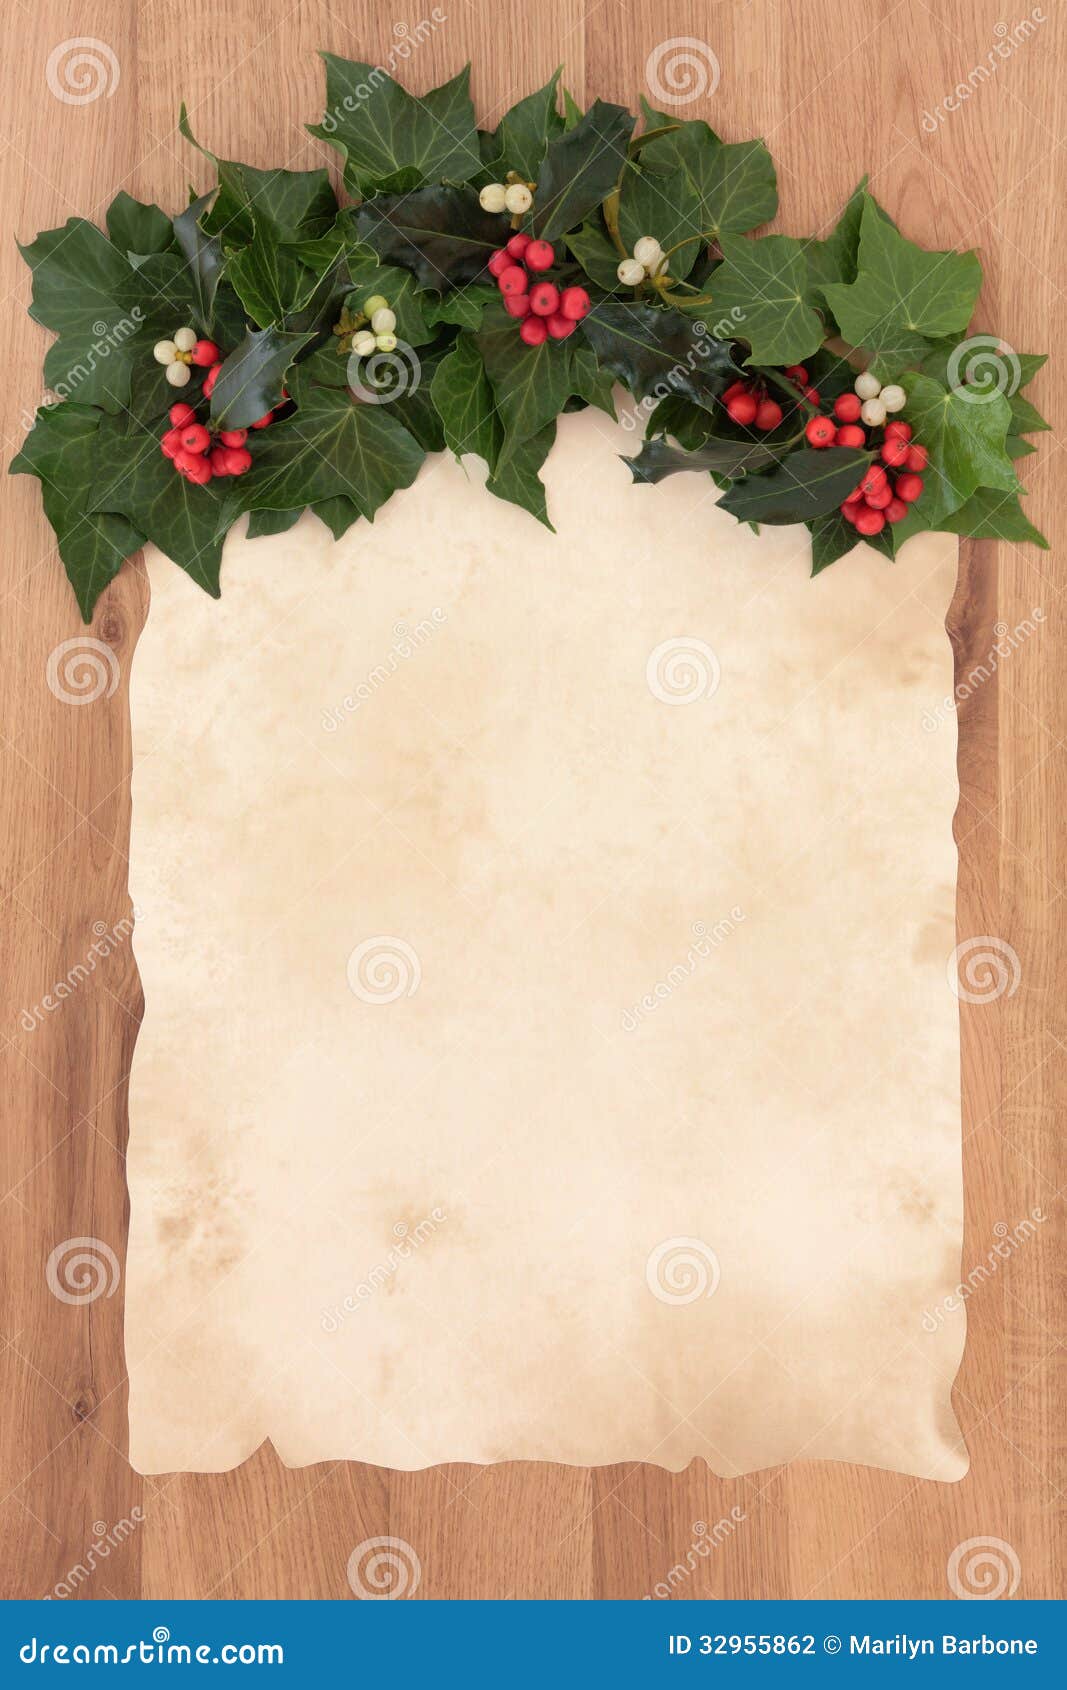 https://thumbs.dreamstime.com/z/christmas-parchment-letter-blank-border-holly-ivy-mistletoe-over-oak-background-32955862.jpg